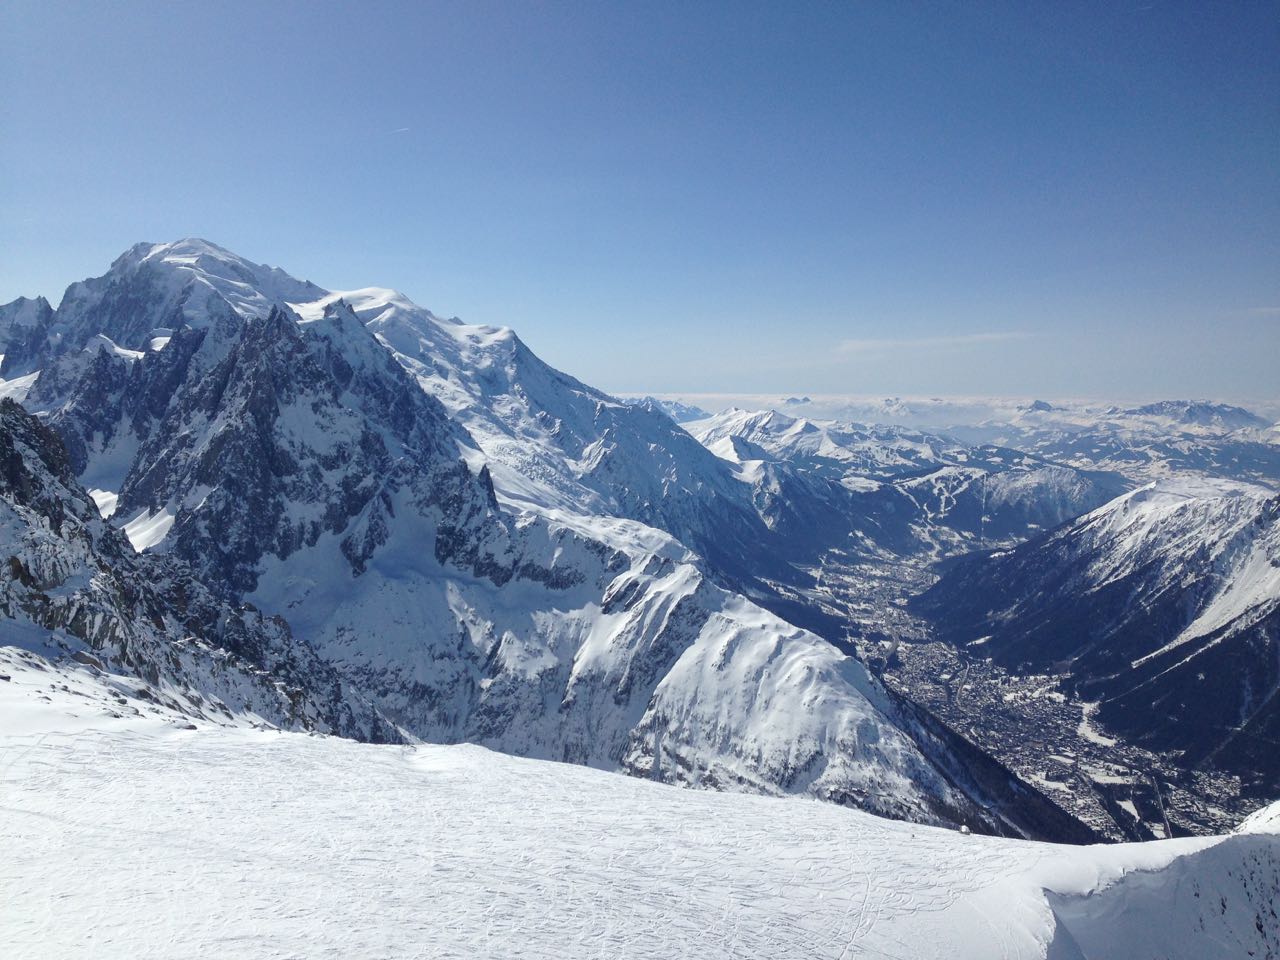 Mt Blanc and Chamonix in snow